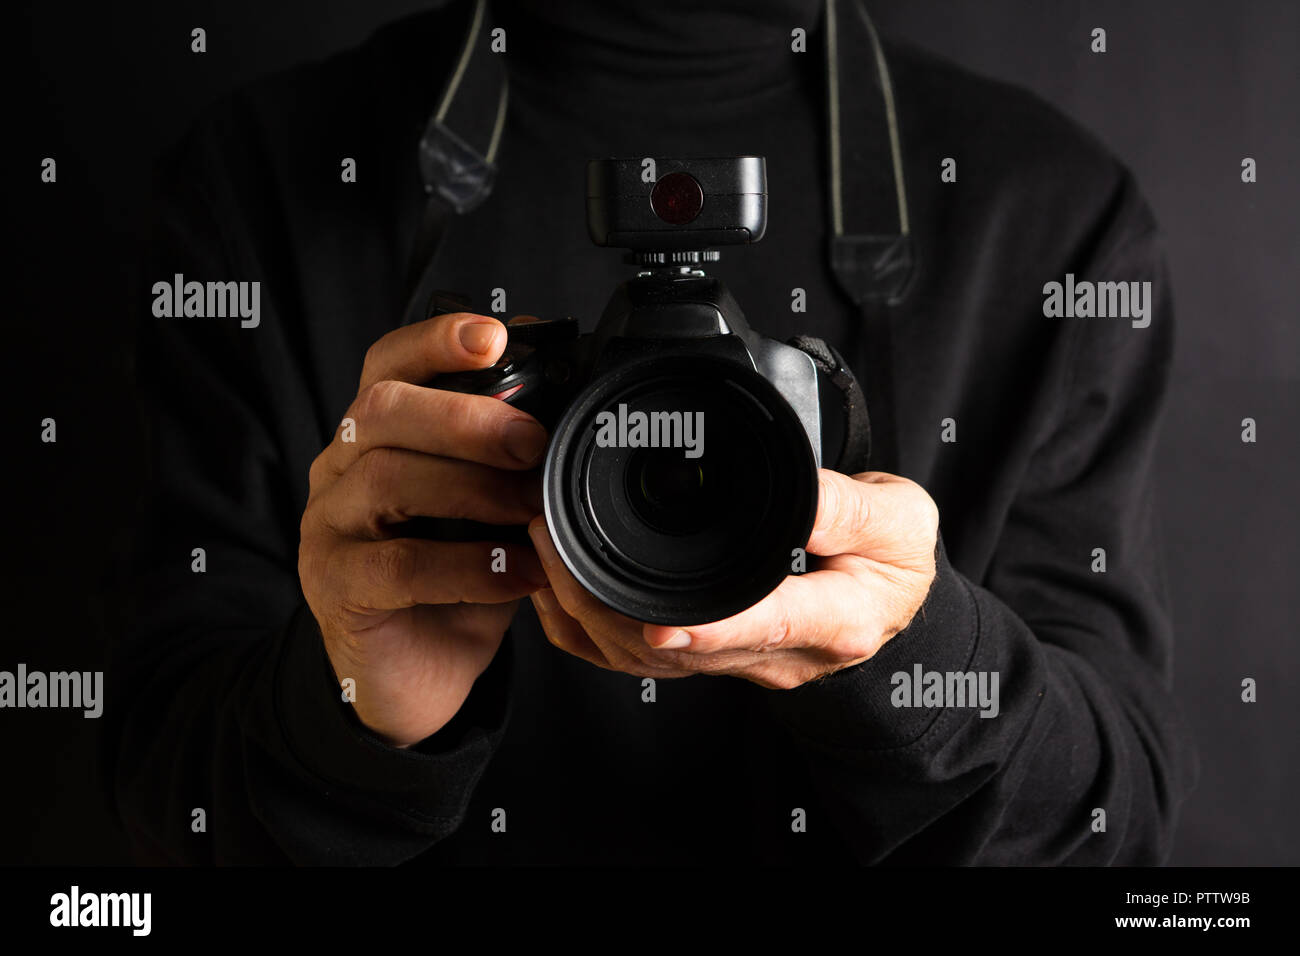 Persona in possesso di una fotocamera reflex digitale close up Foto Stock